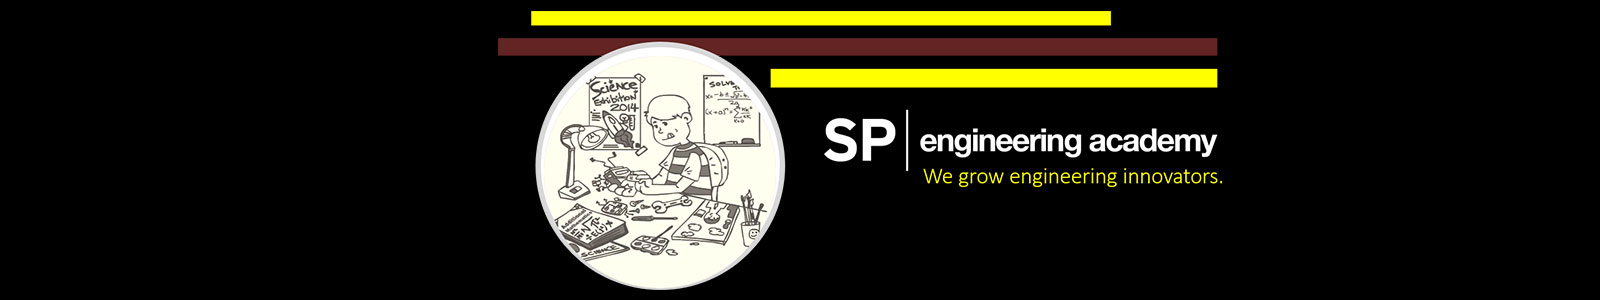 Engineering-Academy-web-banner